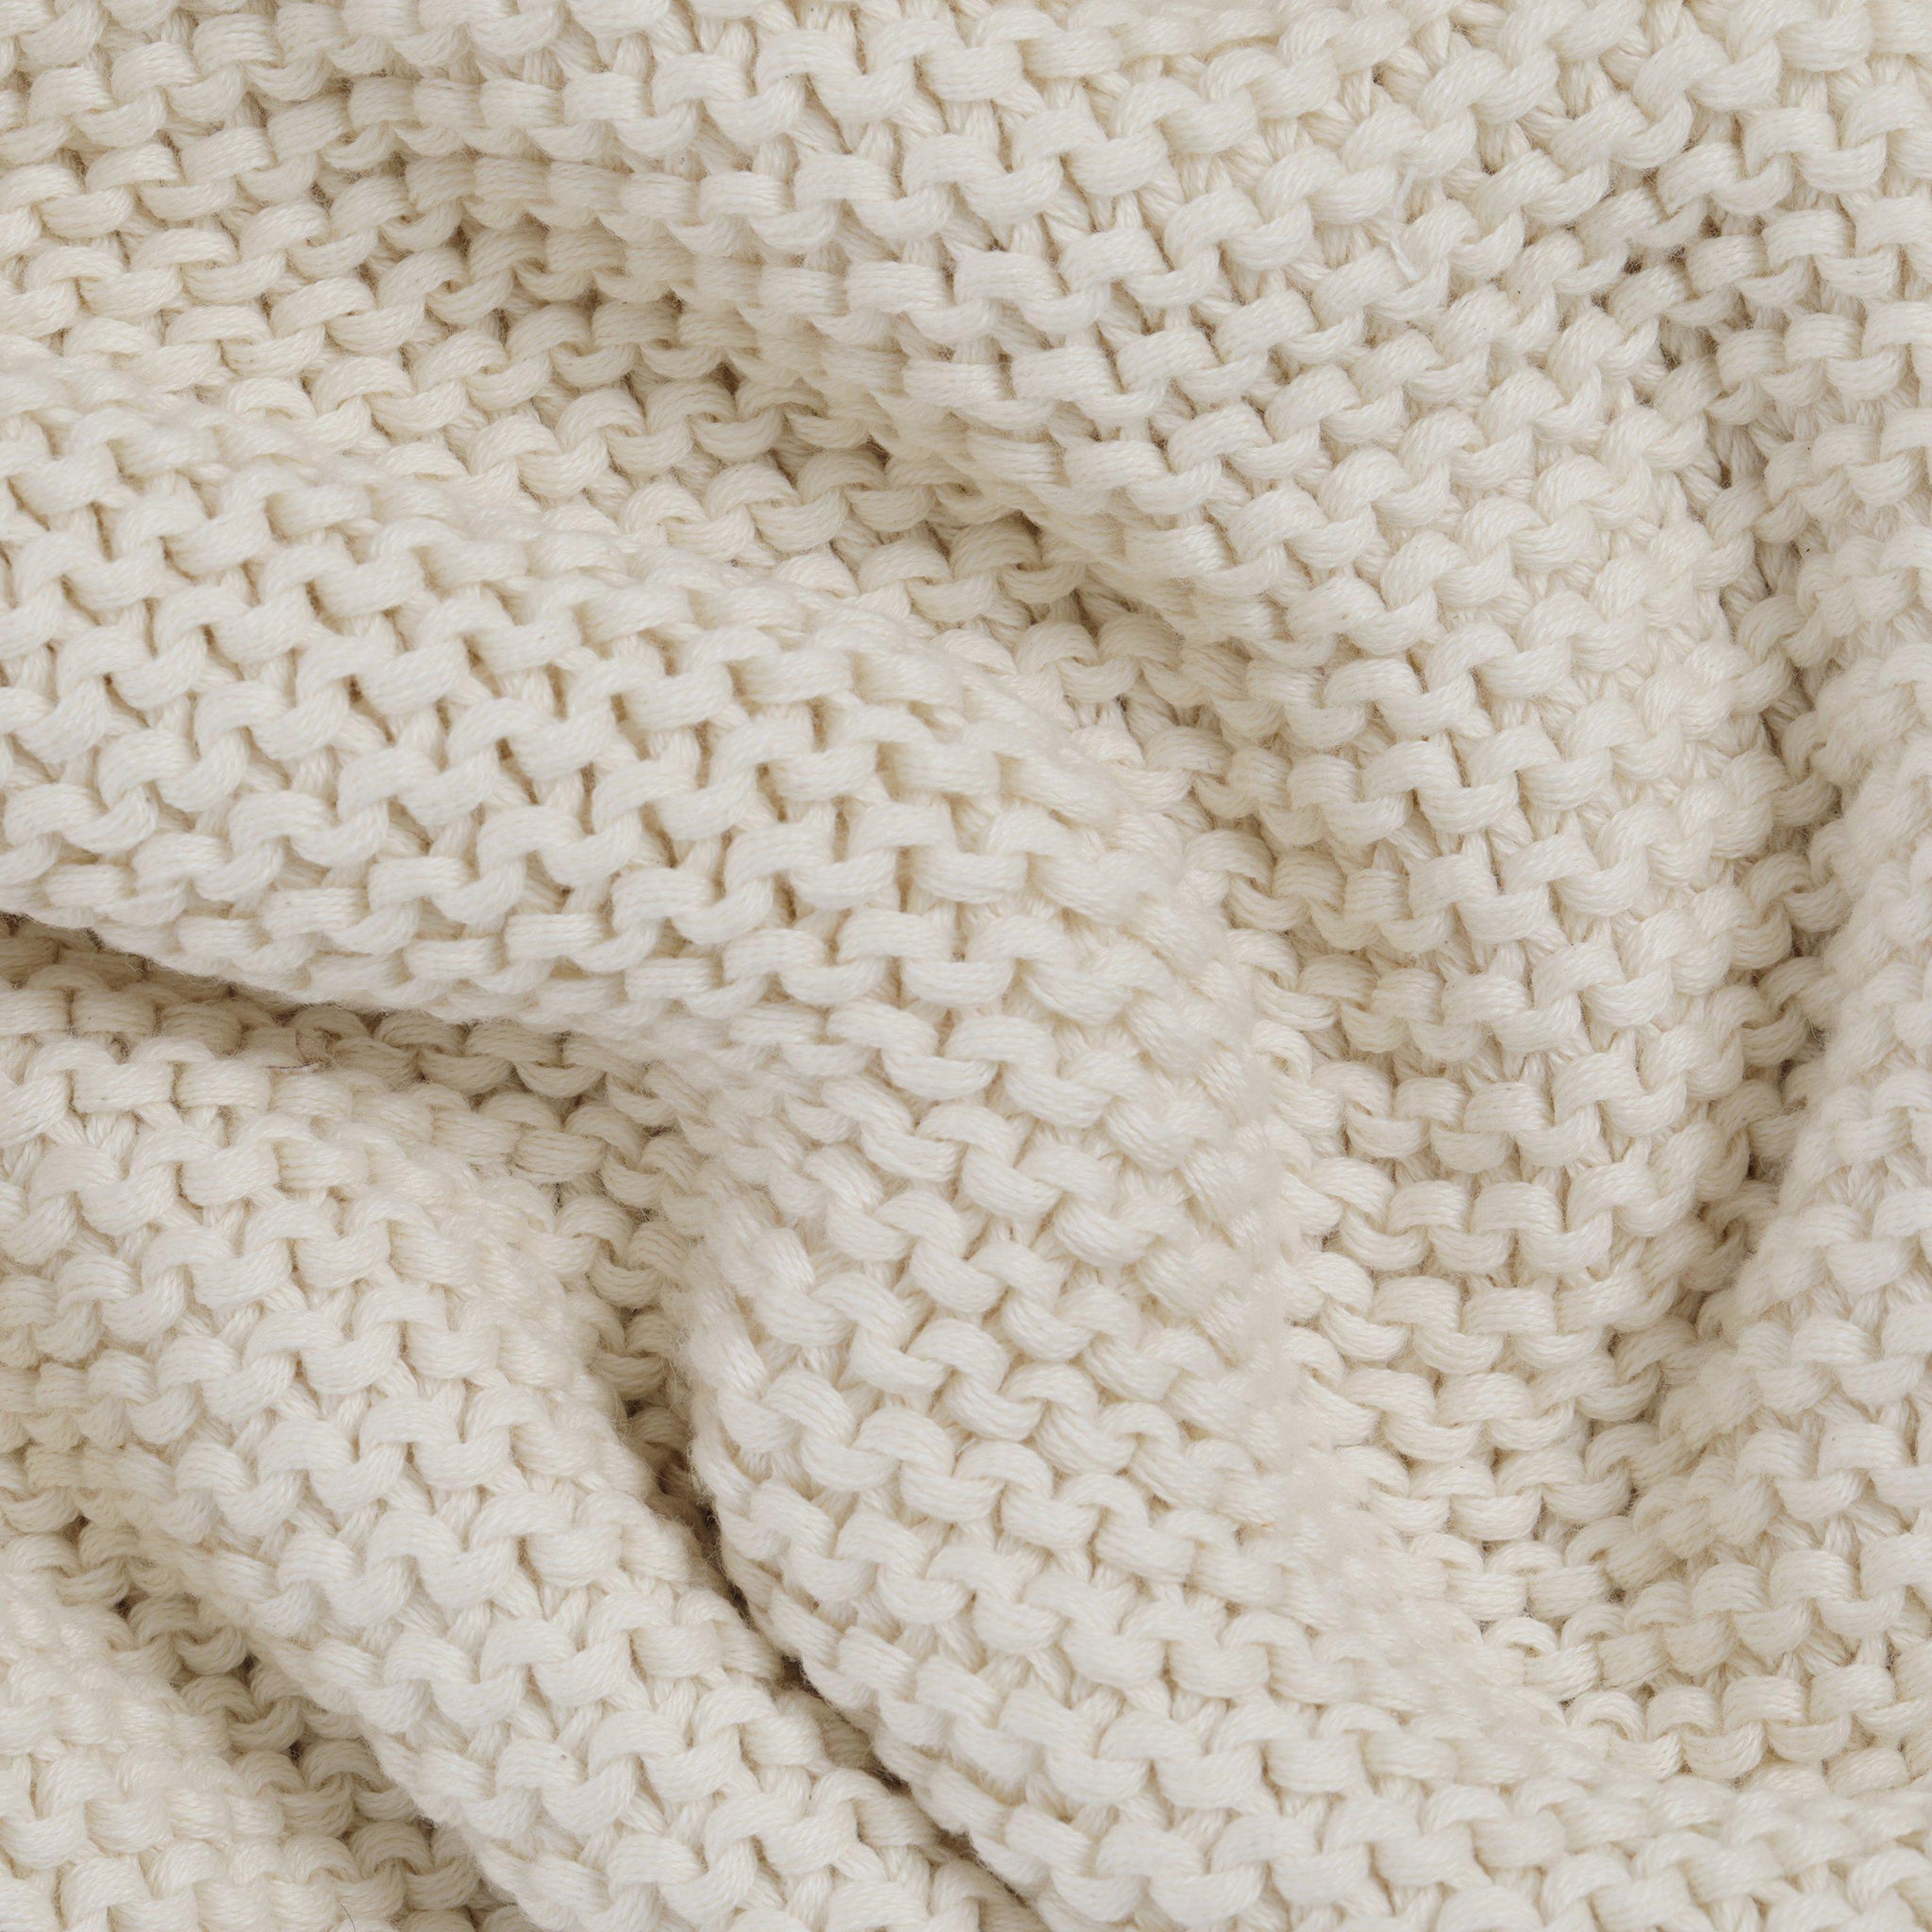 Chunky Knit Blanket. Throw Blanket. Merino Wool Blanket, Organic Certified.  Arm Knit Blanket. Knitted Blanket from Chunky Yarn.